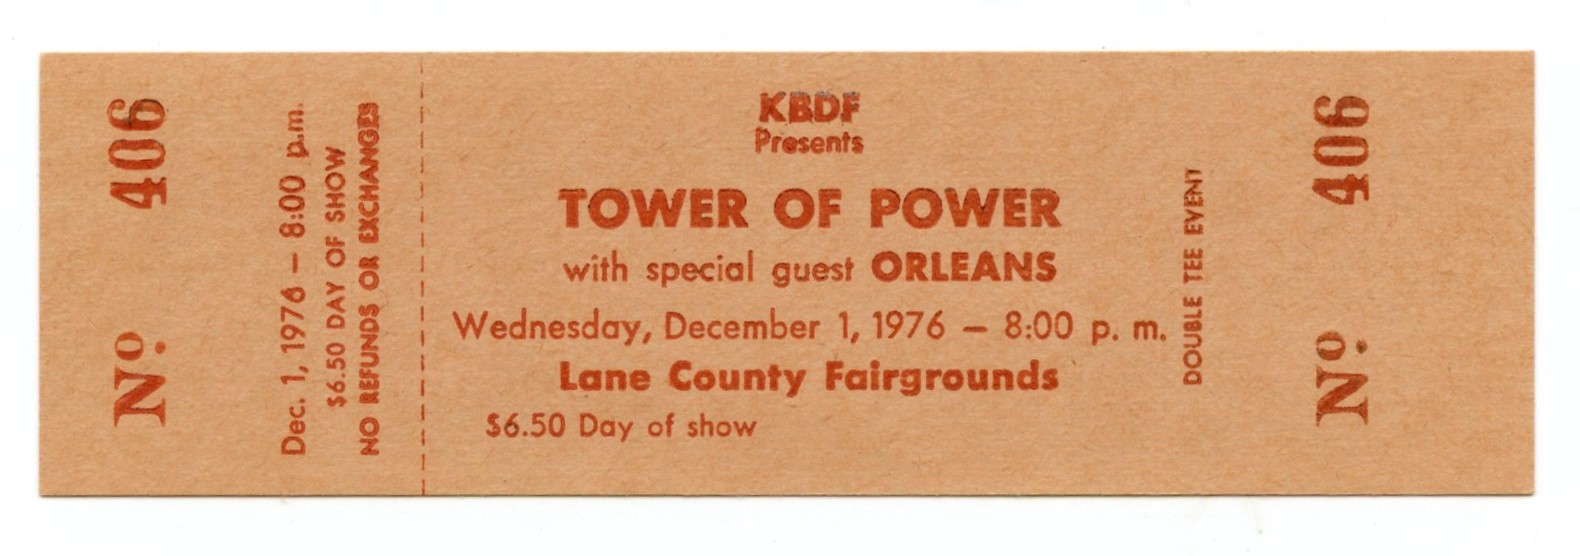 Tower of Power Ticket Vintage 1976 Dec 1 Eugne OR  